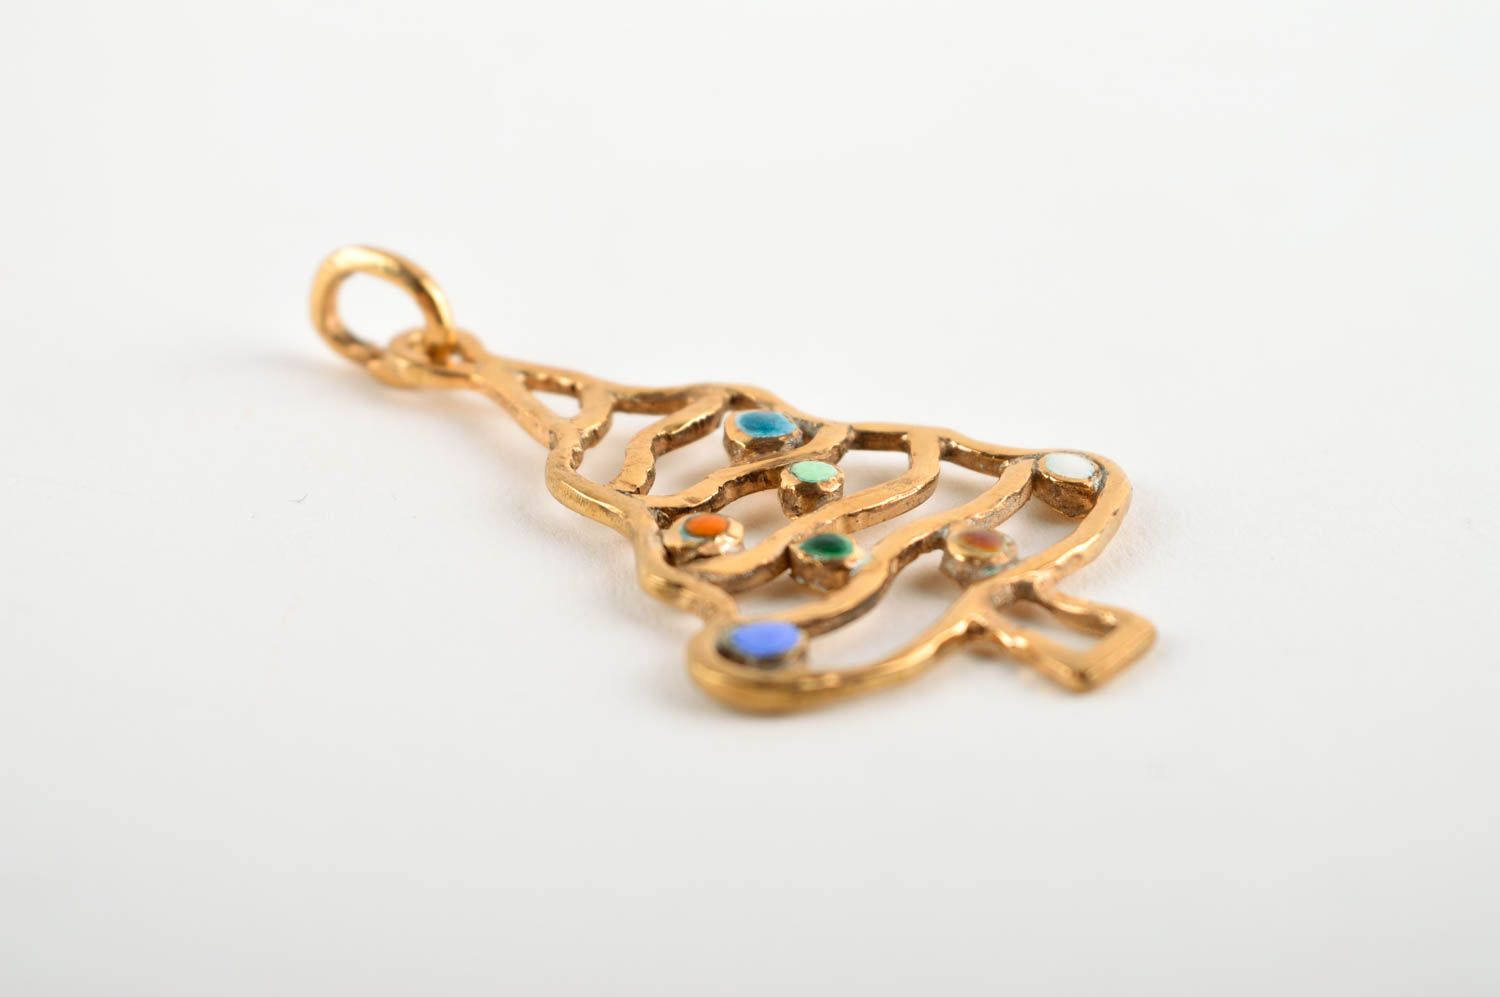 Homemade jewelry designer necklace pendant necklace Christmas gift ideas photo 4